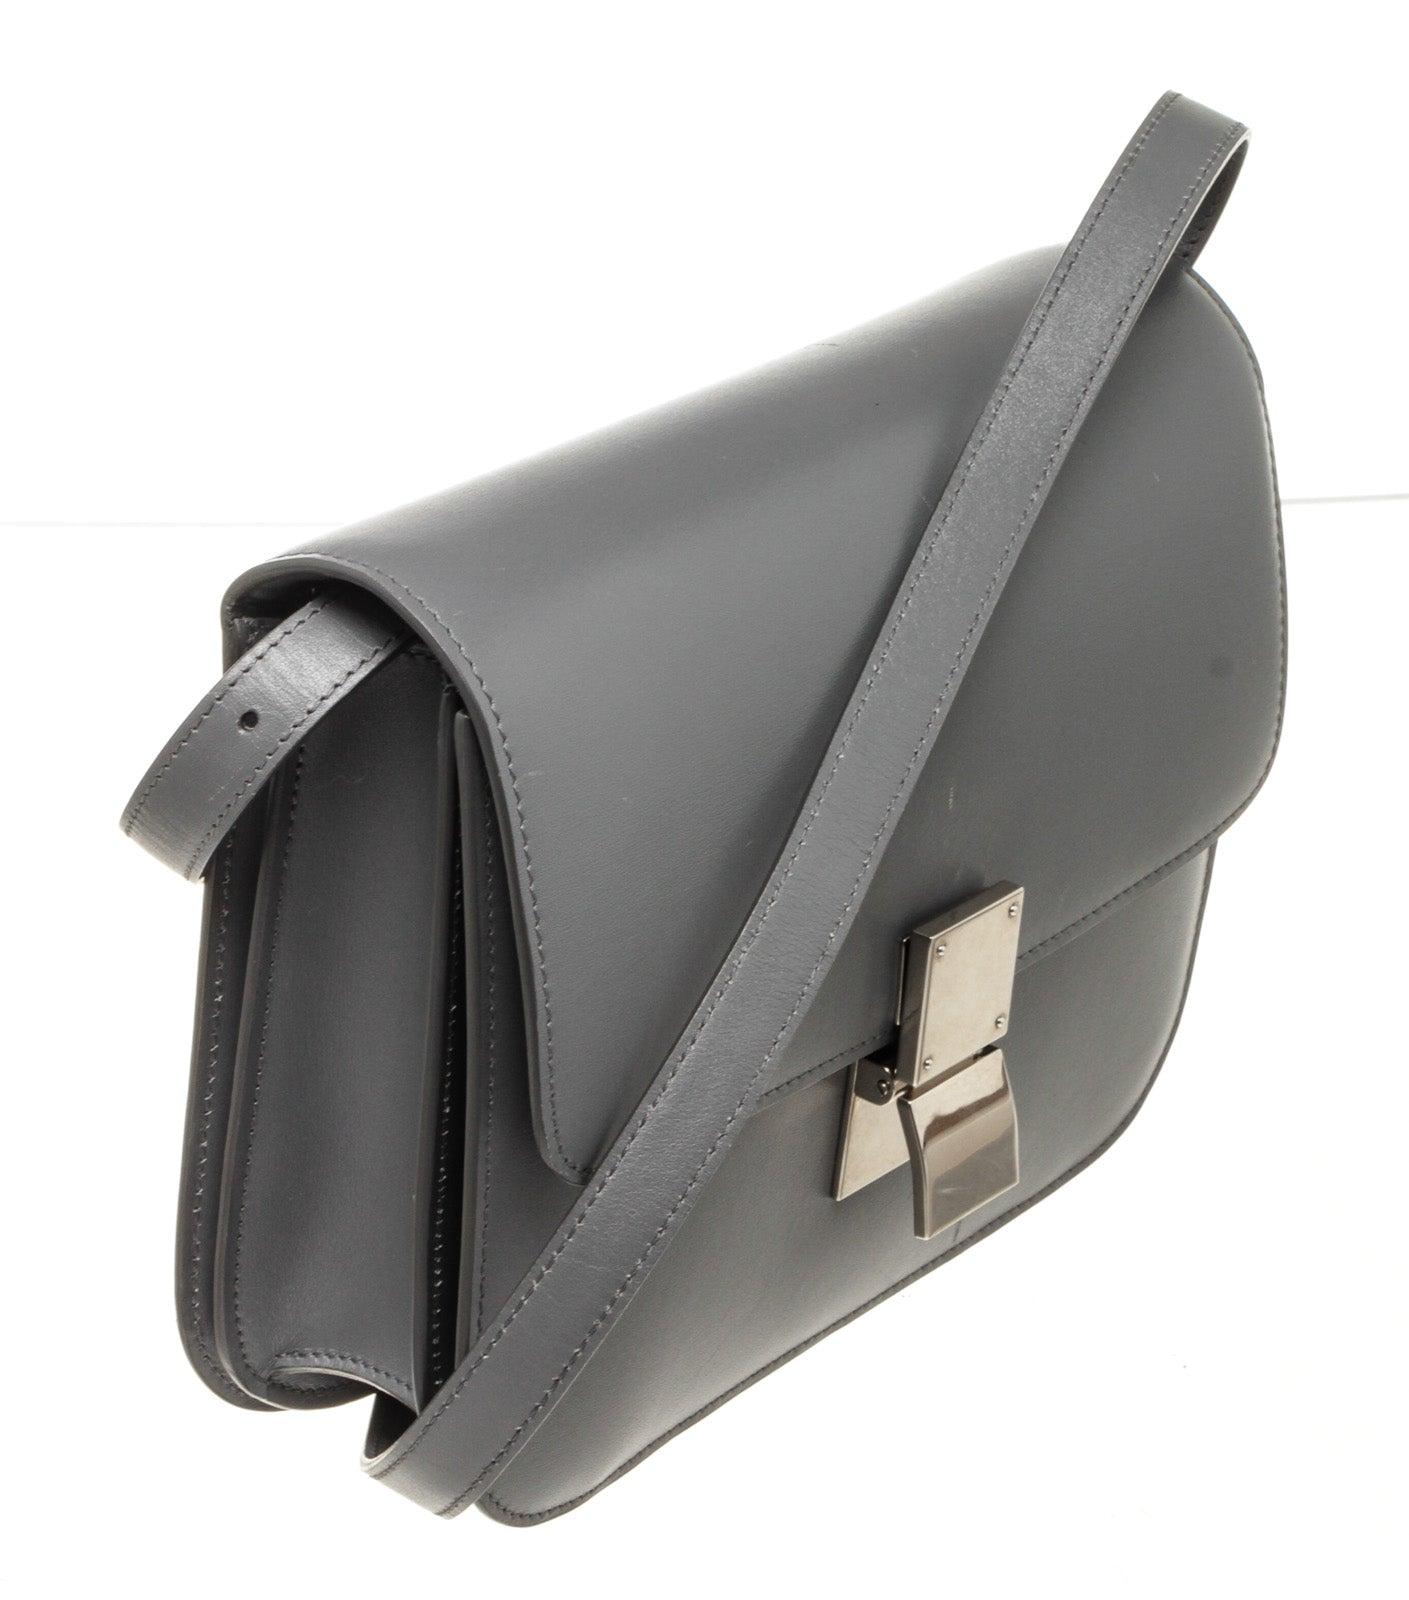 Celine Grey Leather Classic Medium Shoulder Bag with leather, gold-tone hardware, trim tan vachetta leather, interior slip pocket, shoulder strap and push lock closure.
48593MSC